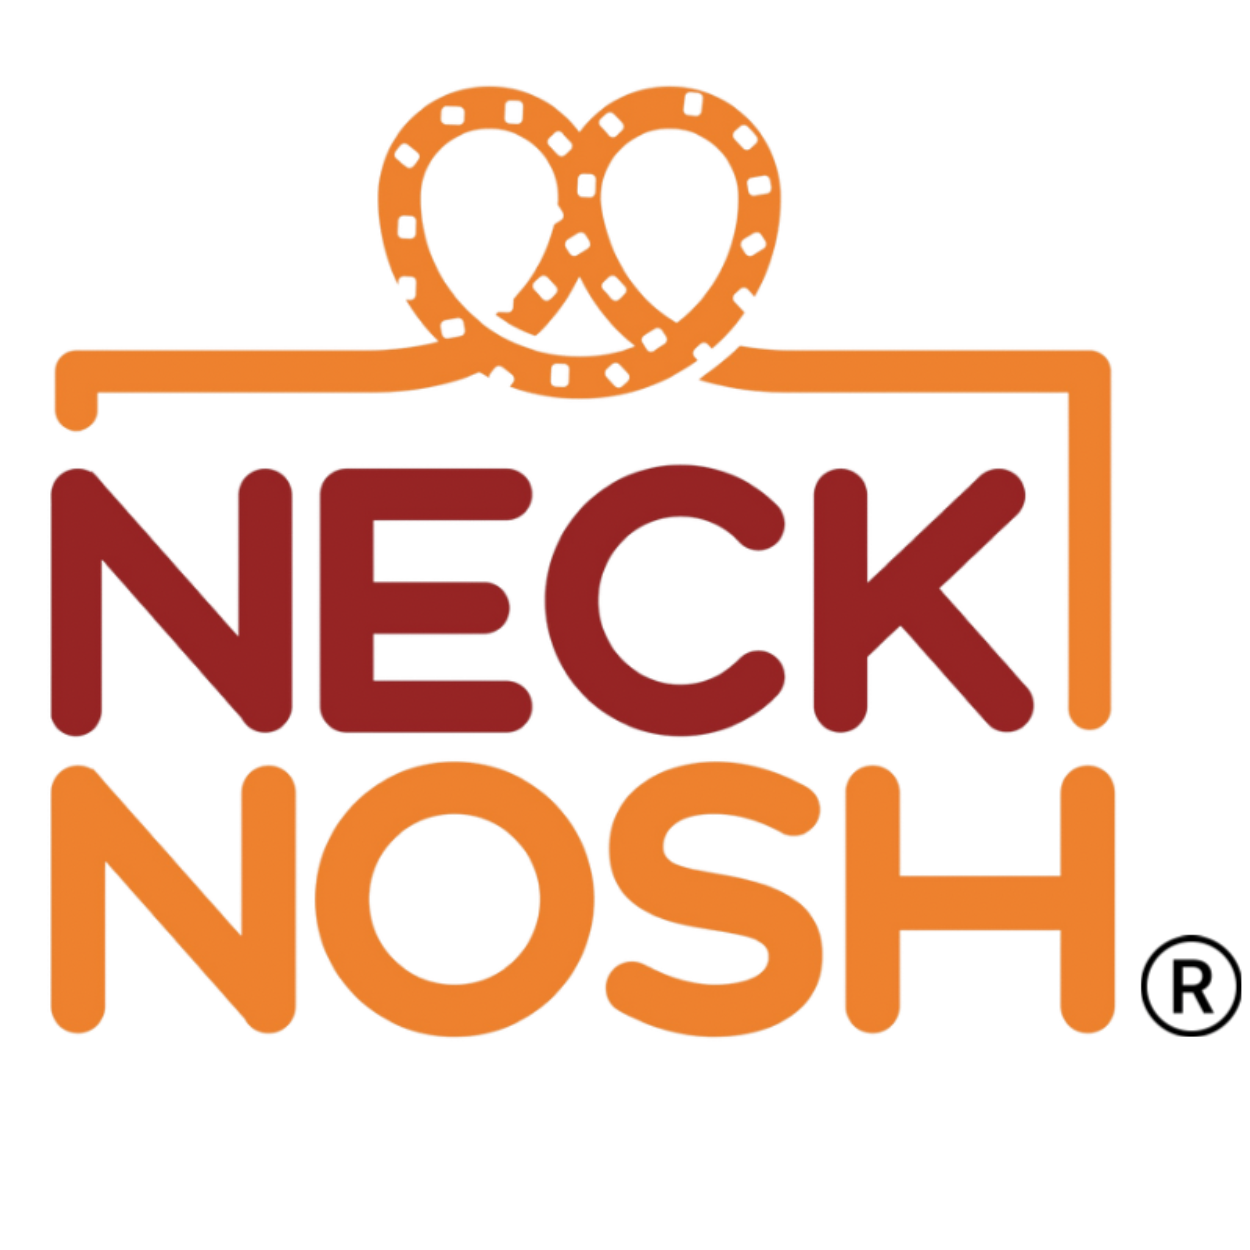 neck nosh logo